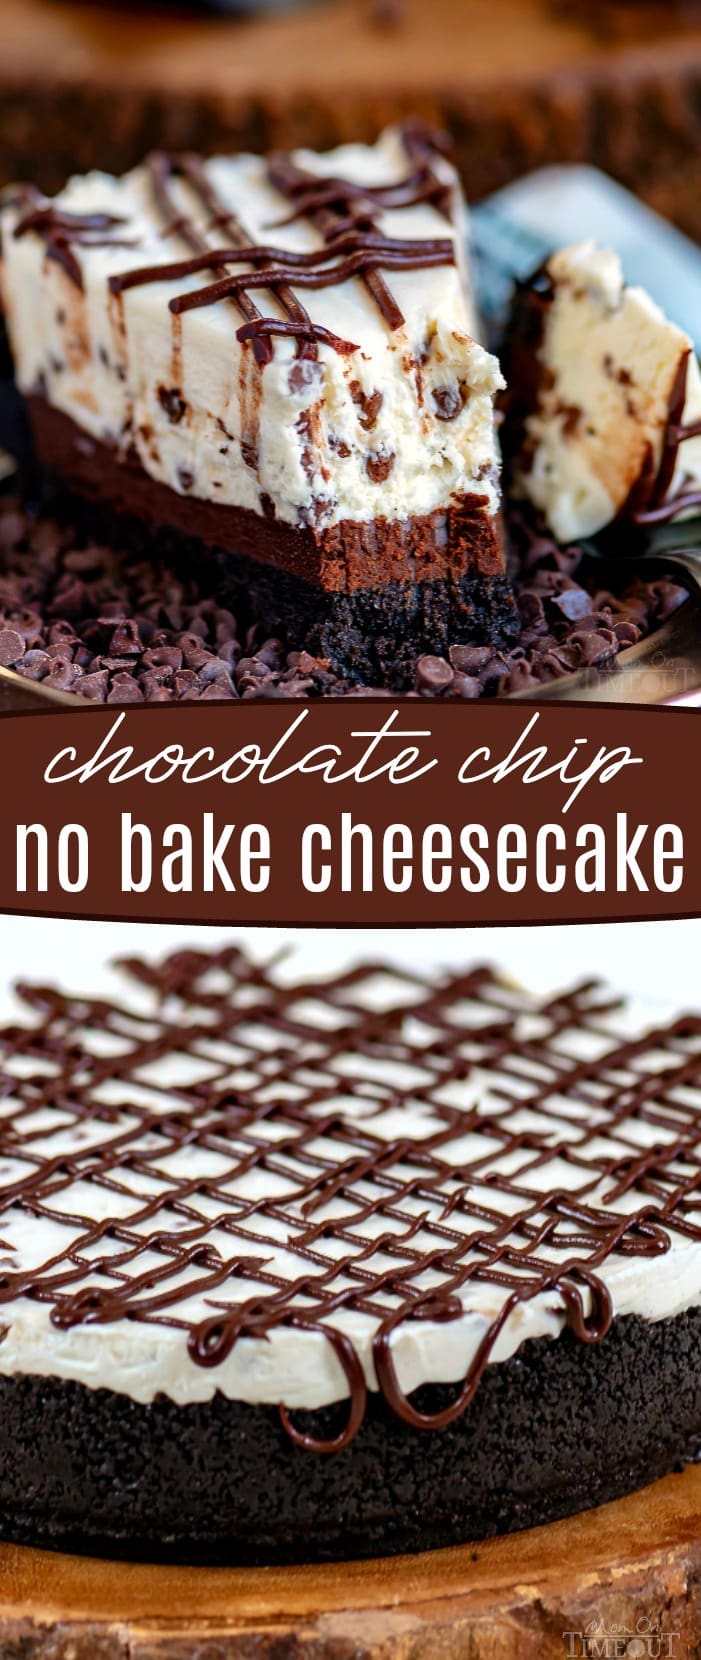 chocolate-chip-no-bake-cheesecake-collage